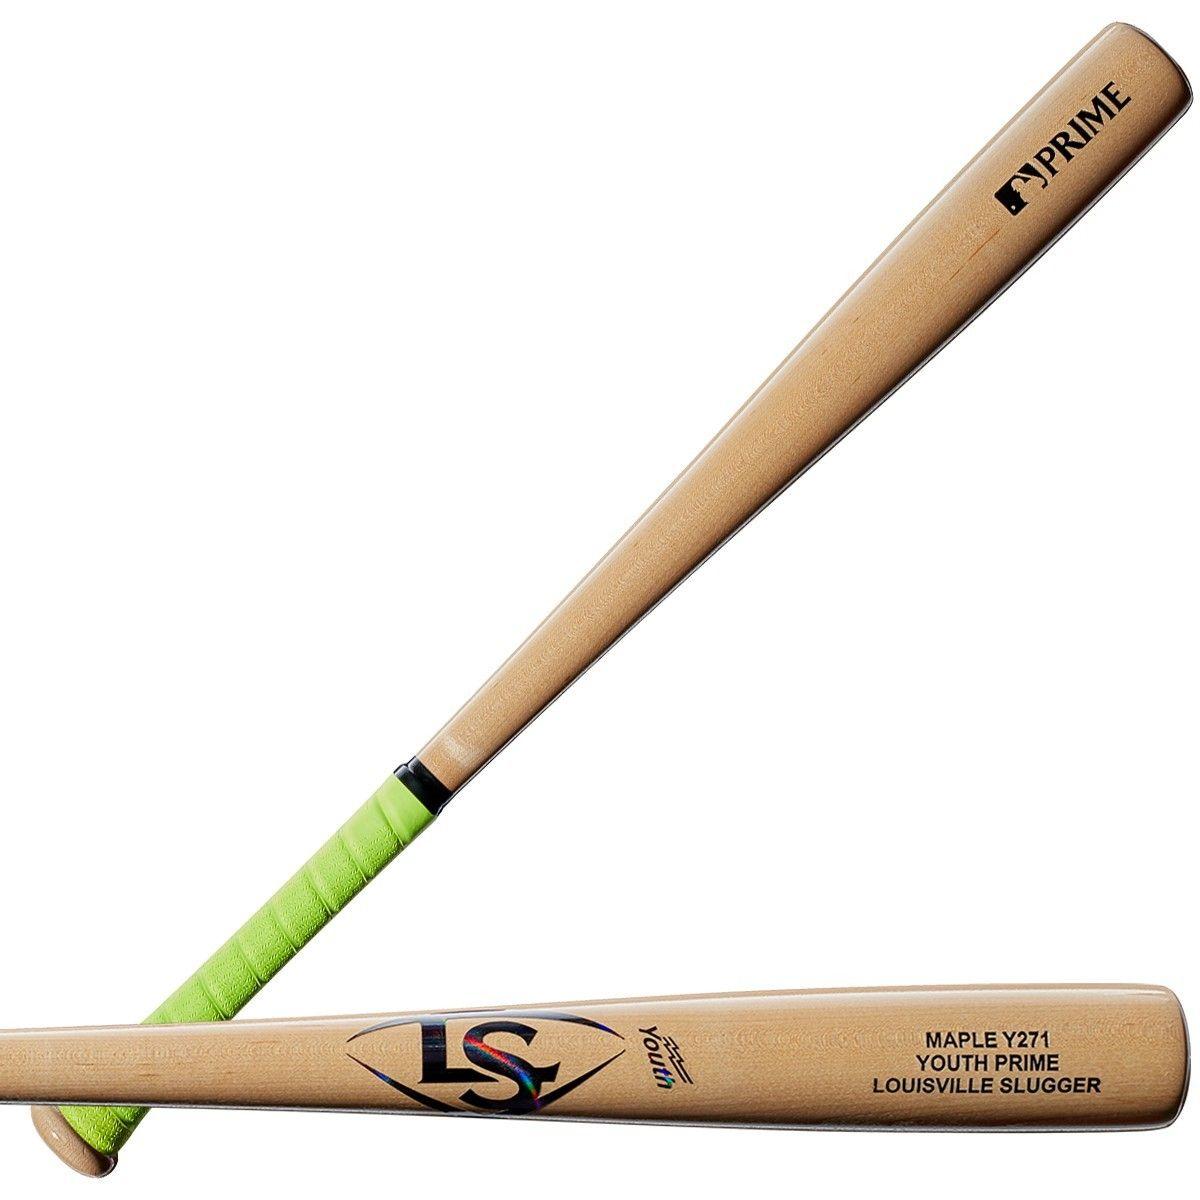 Louisville Slugger Bat Logo - Youth Prime Y271 Natural Neon Yellow Grip Baseball Bat. Louisville